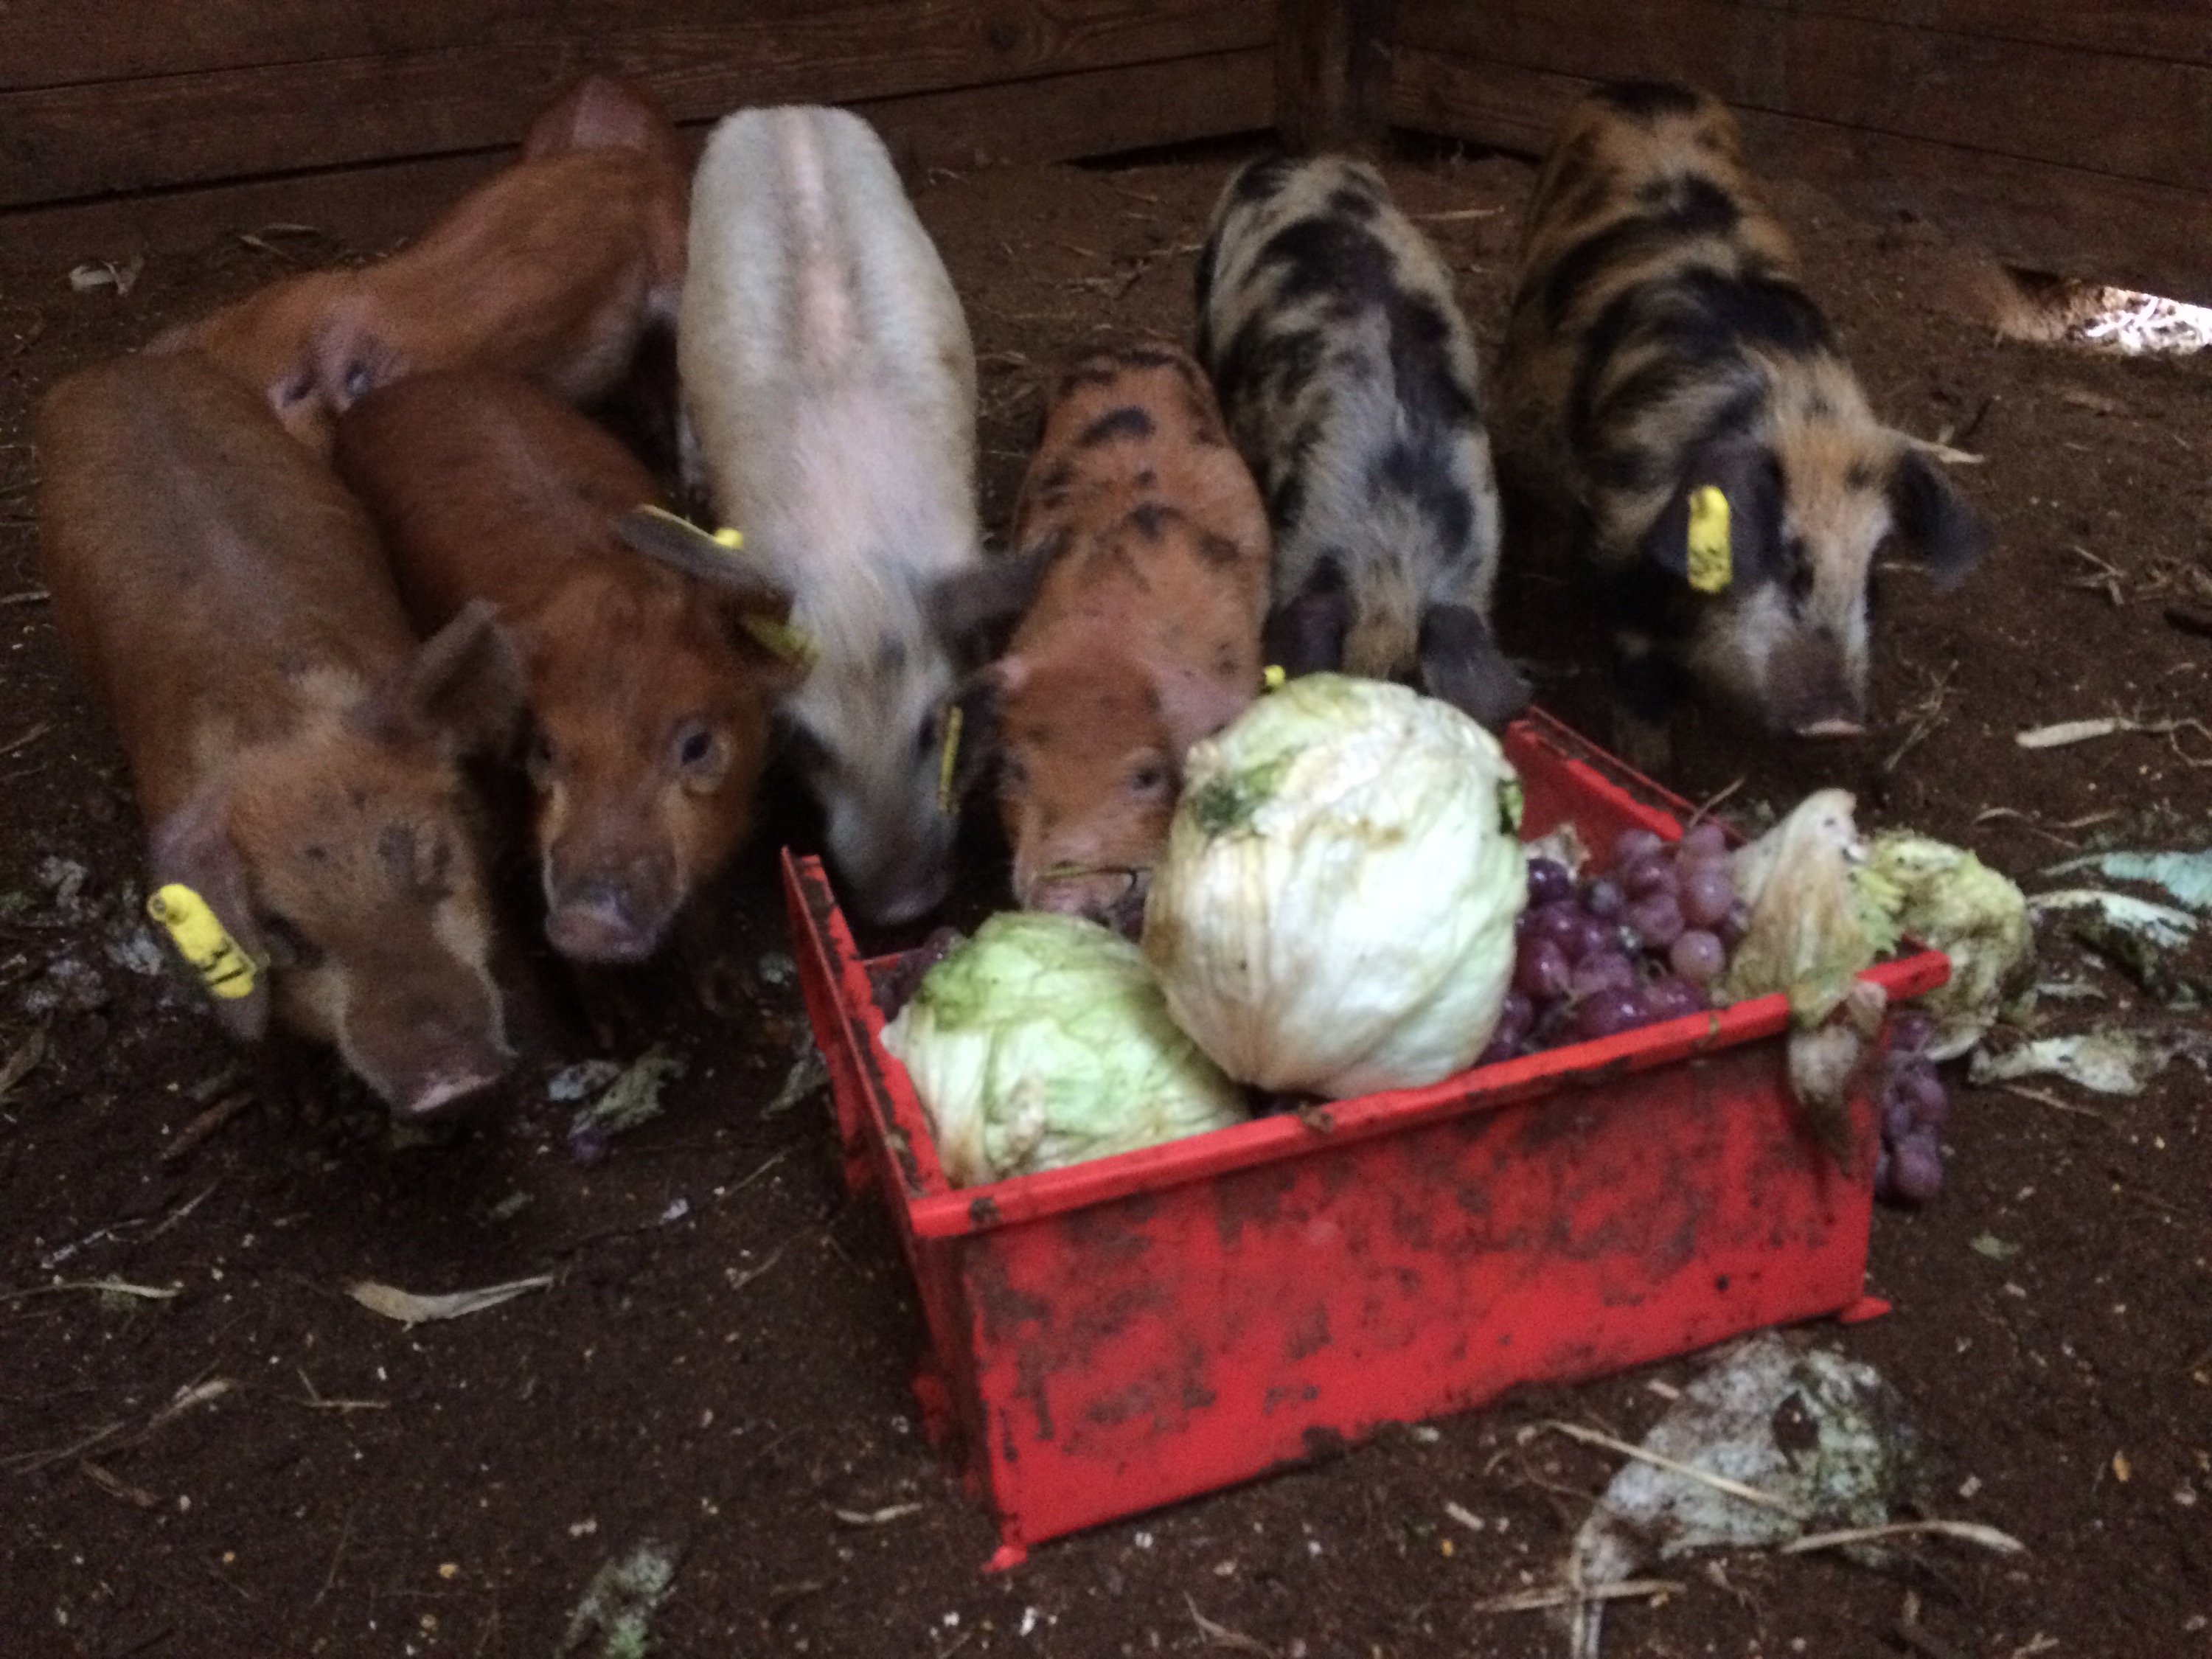 Piglets eating fresh veggies